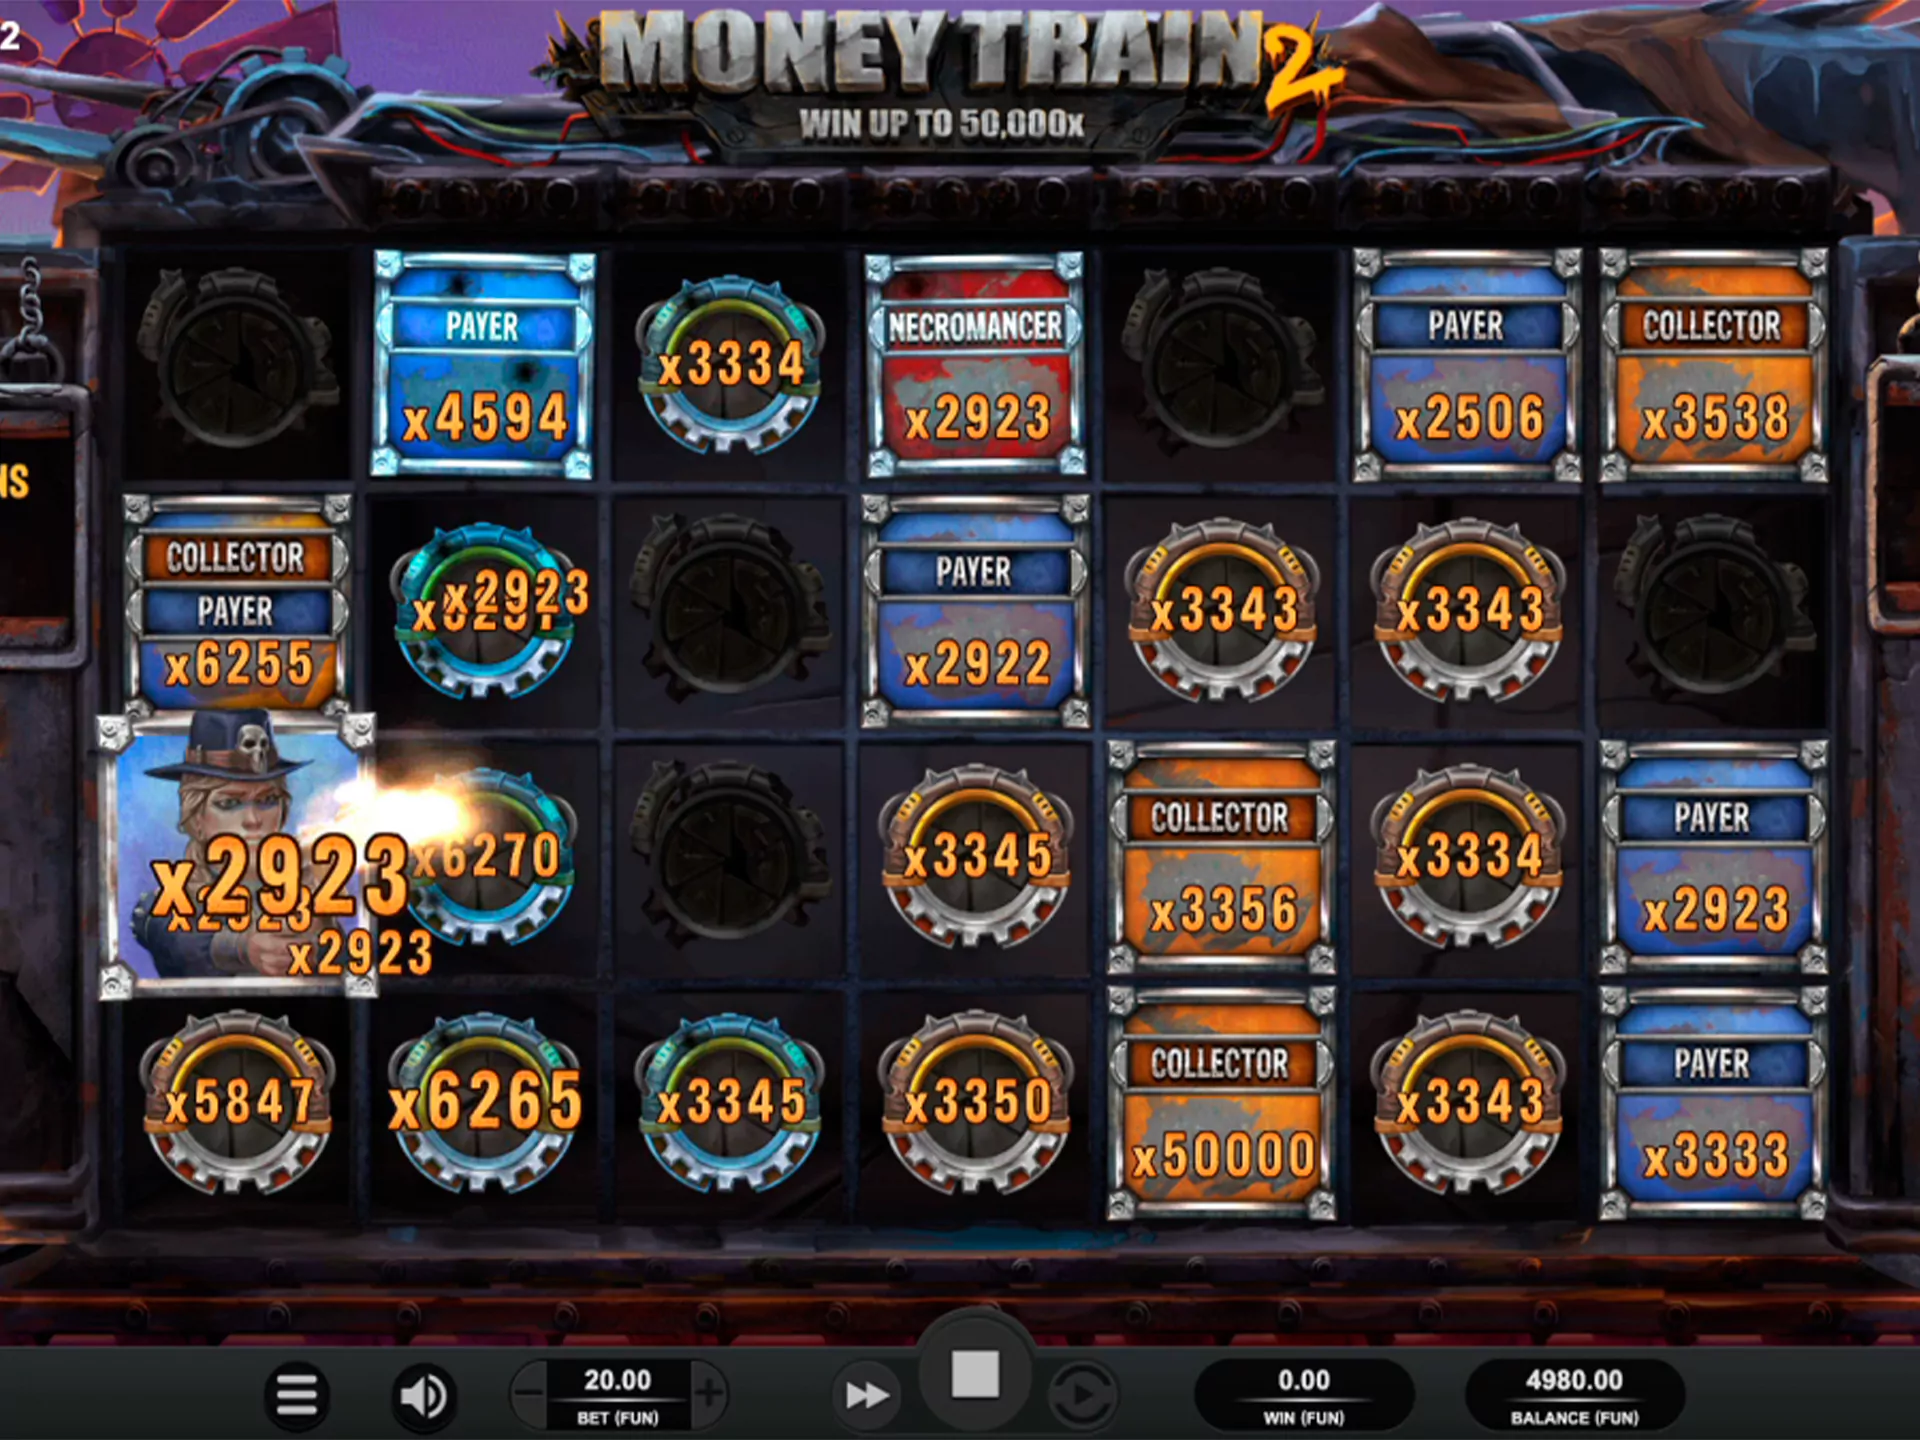 The Money Train 2 slot.